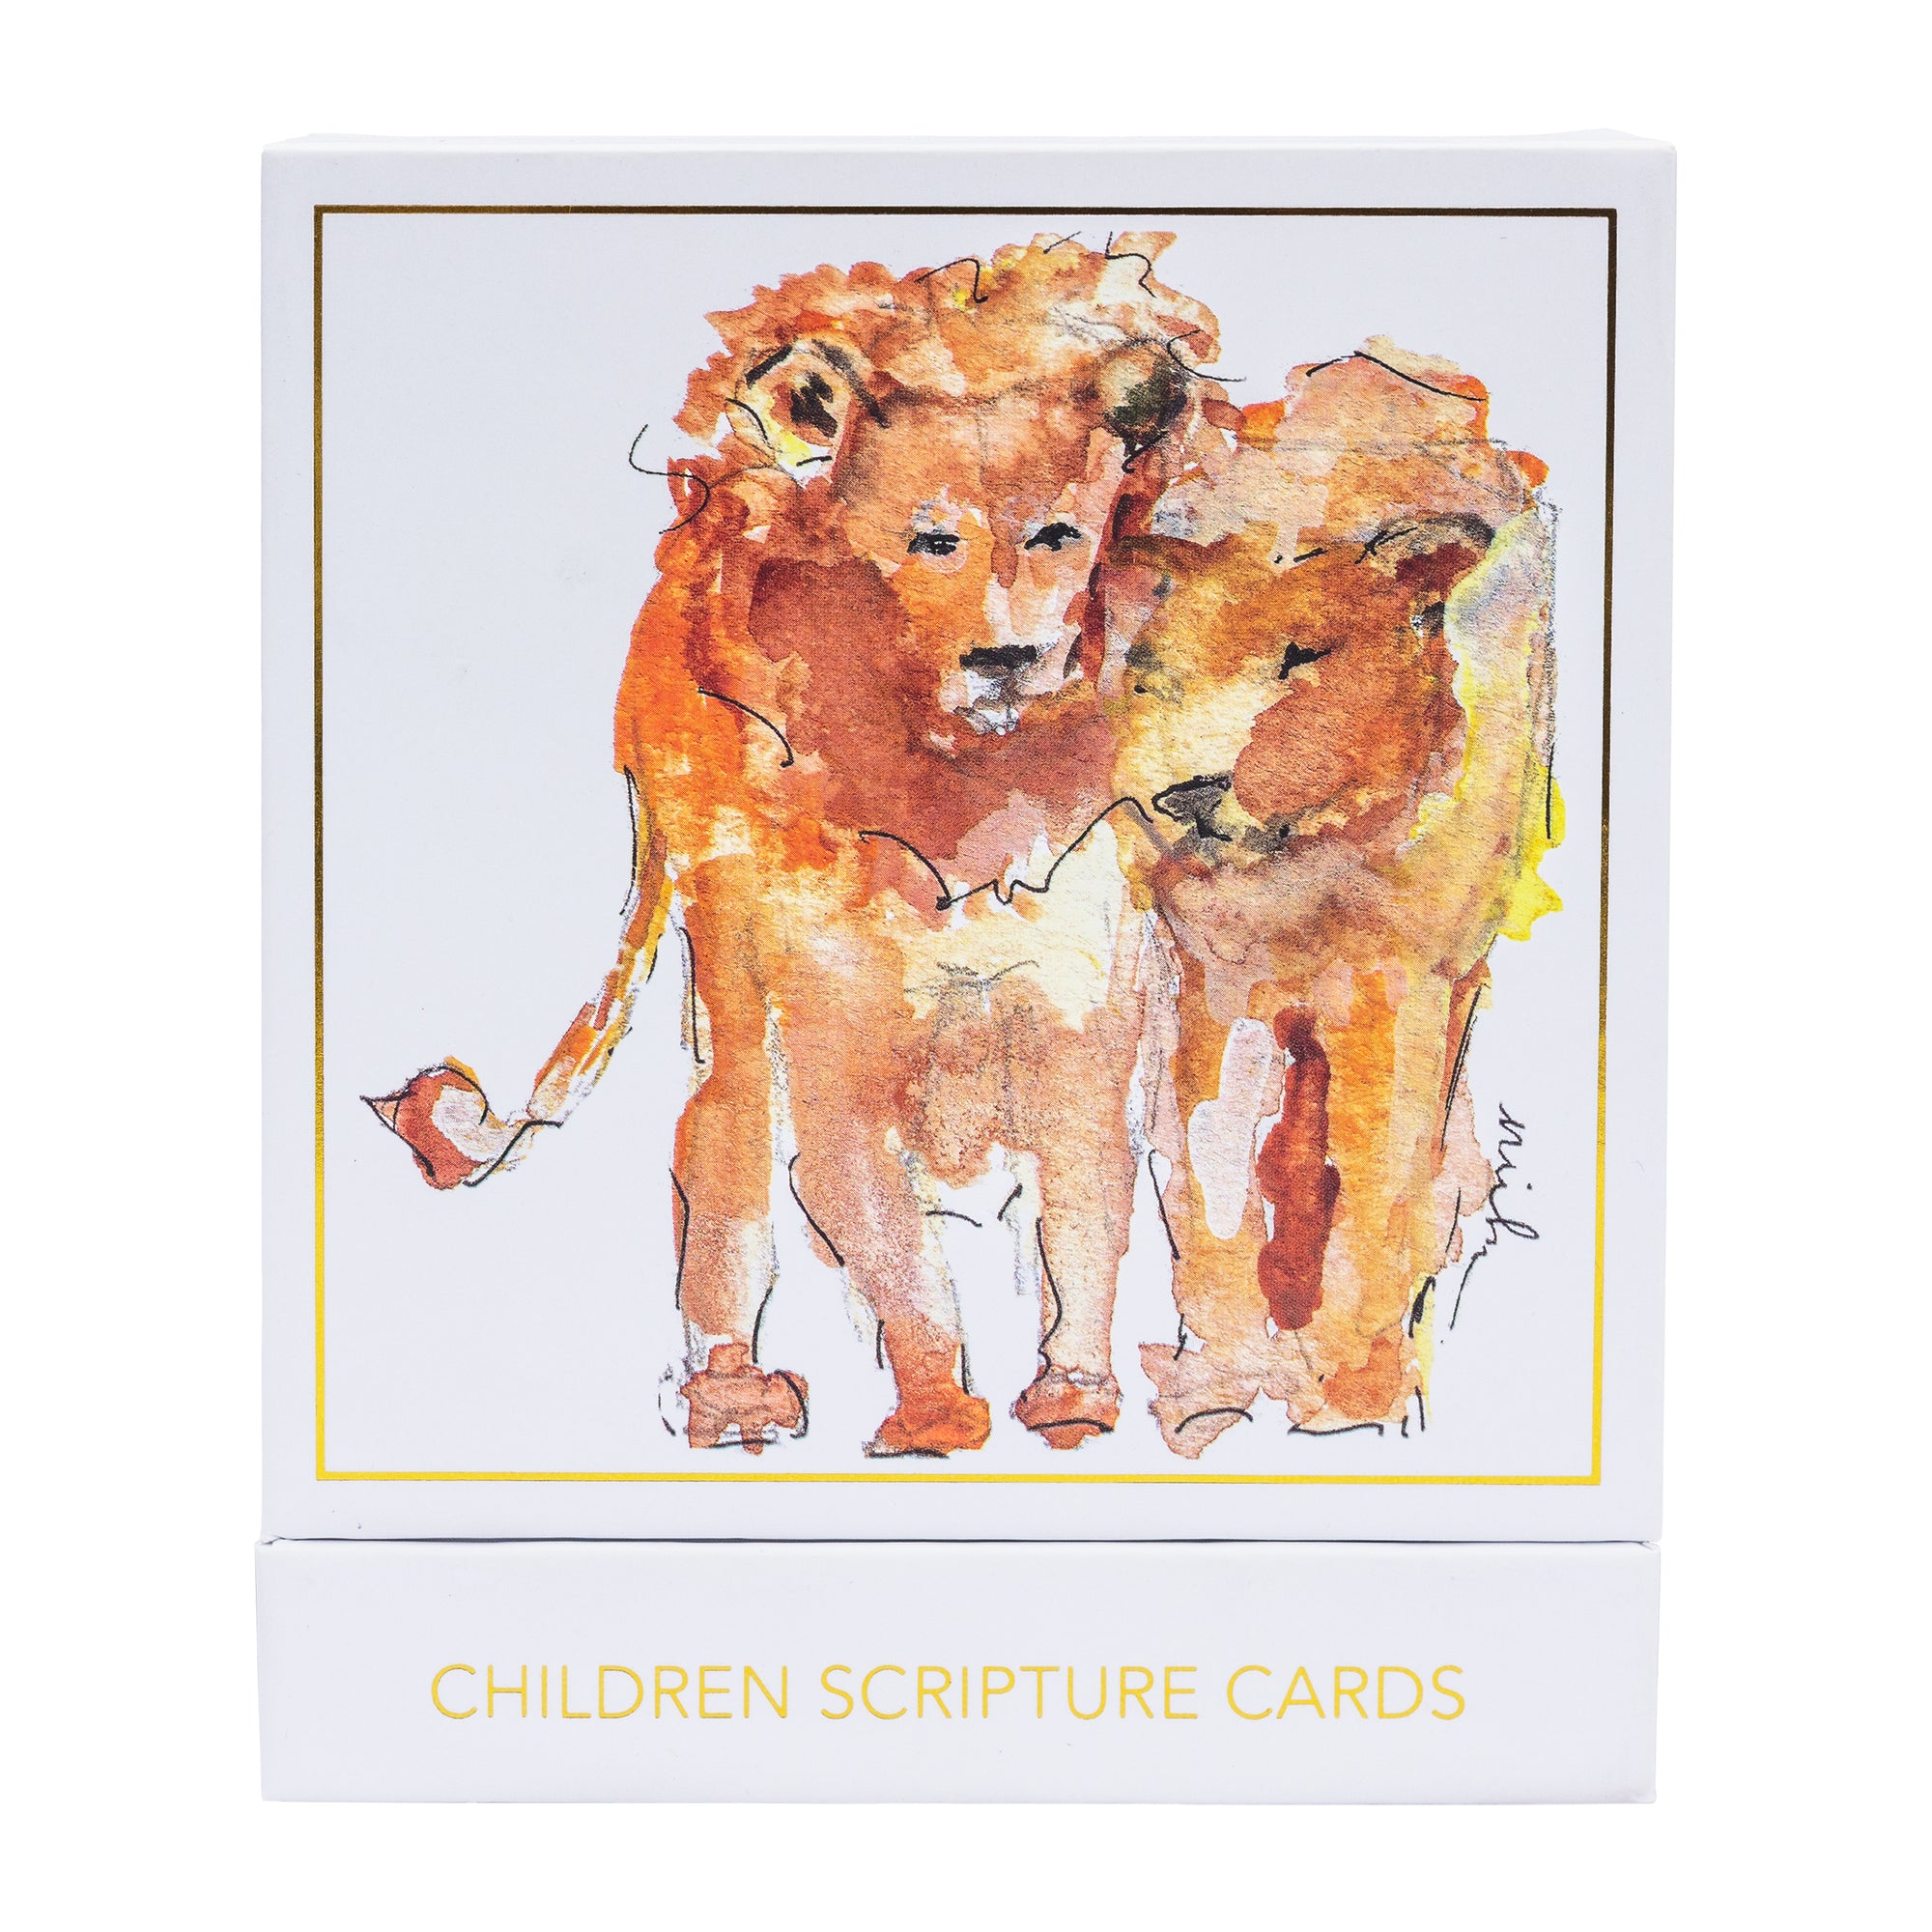 Children's Scripture Cards - The Preppy Bunny